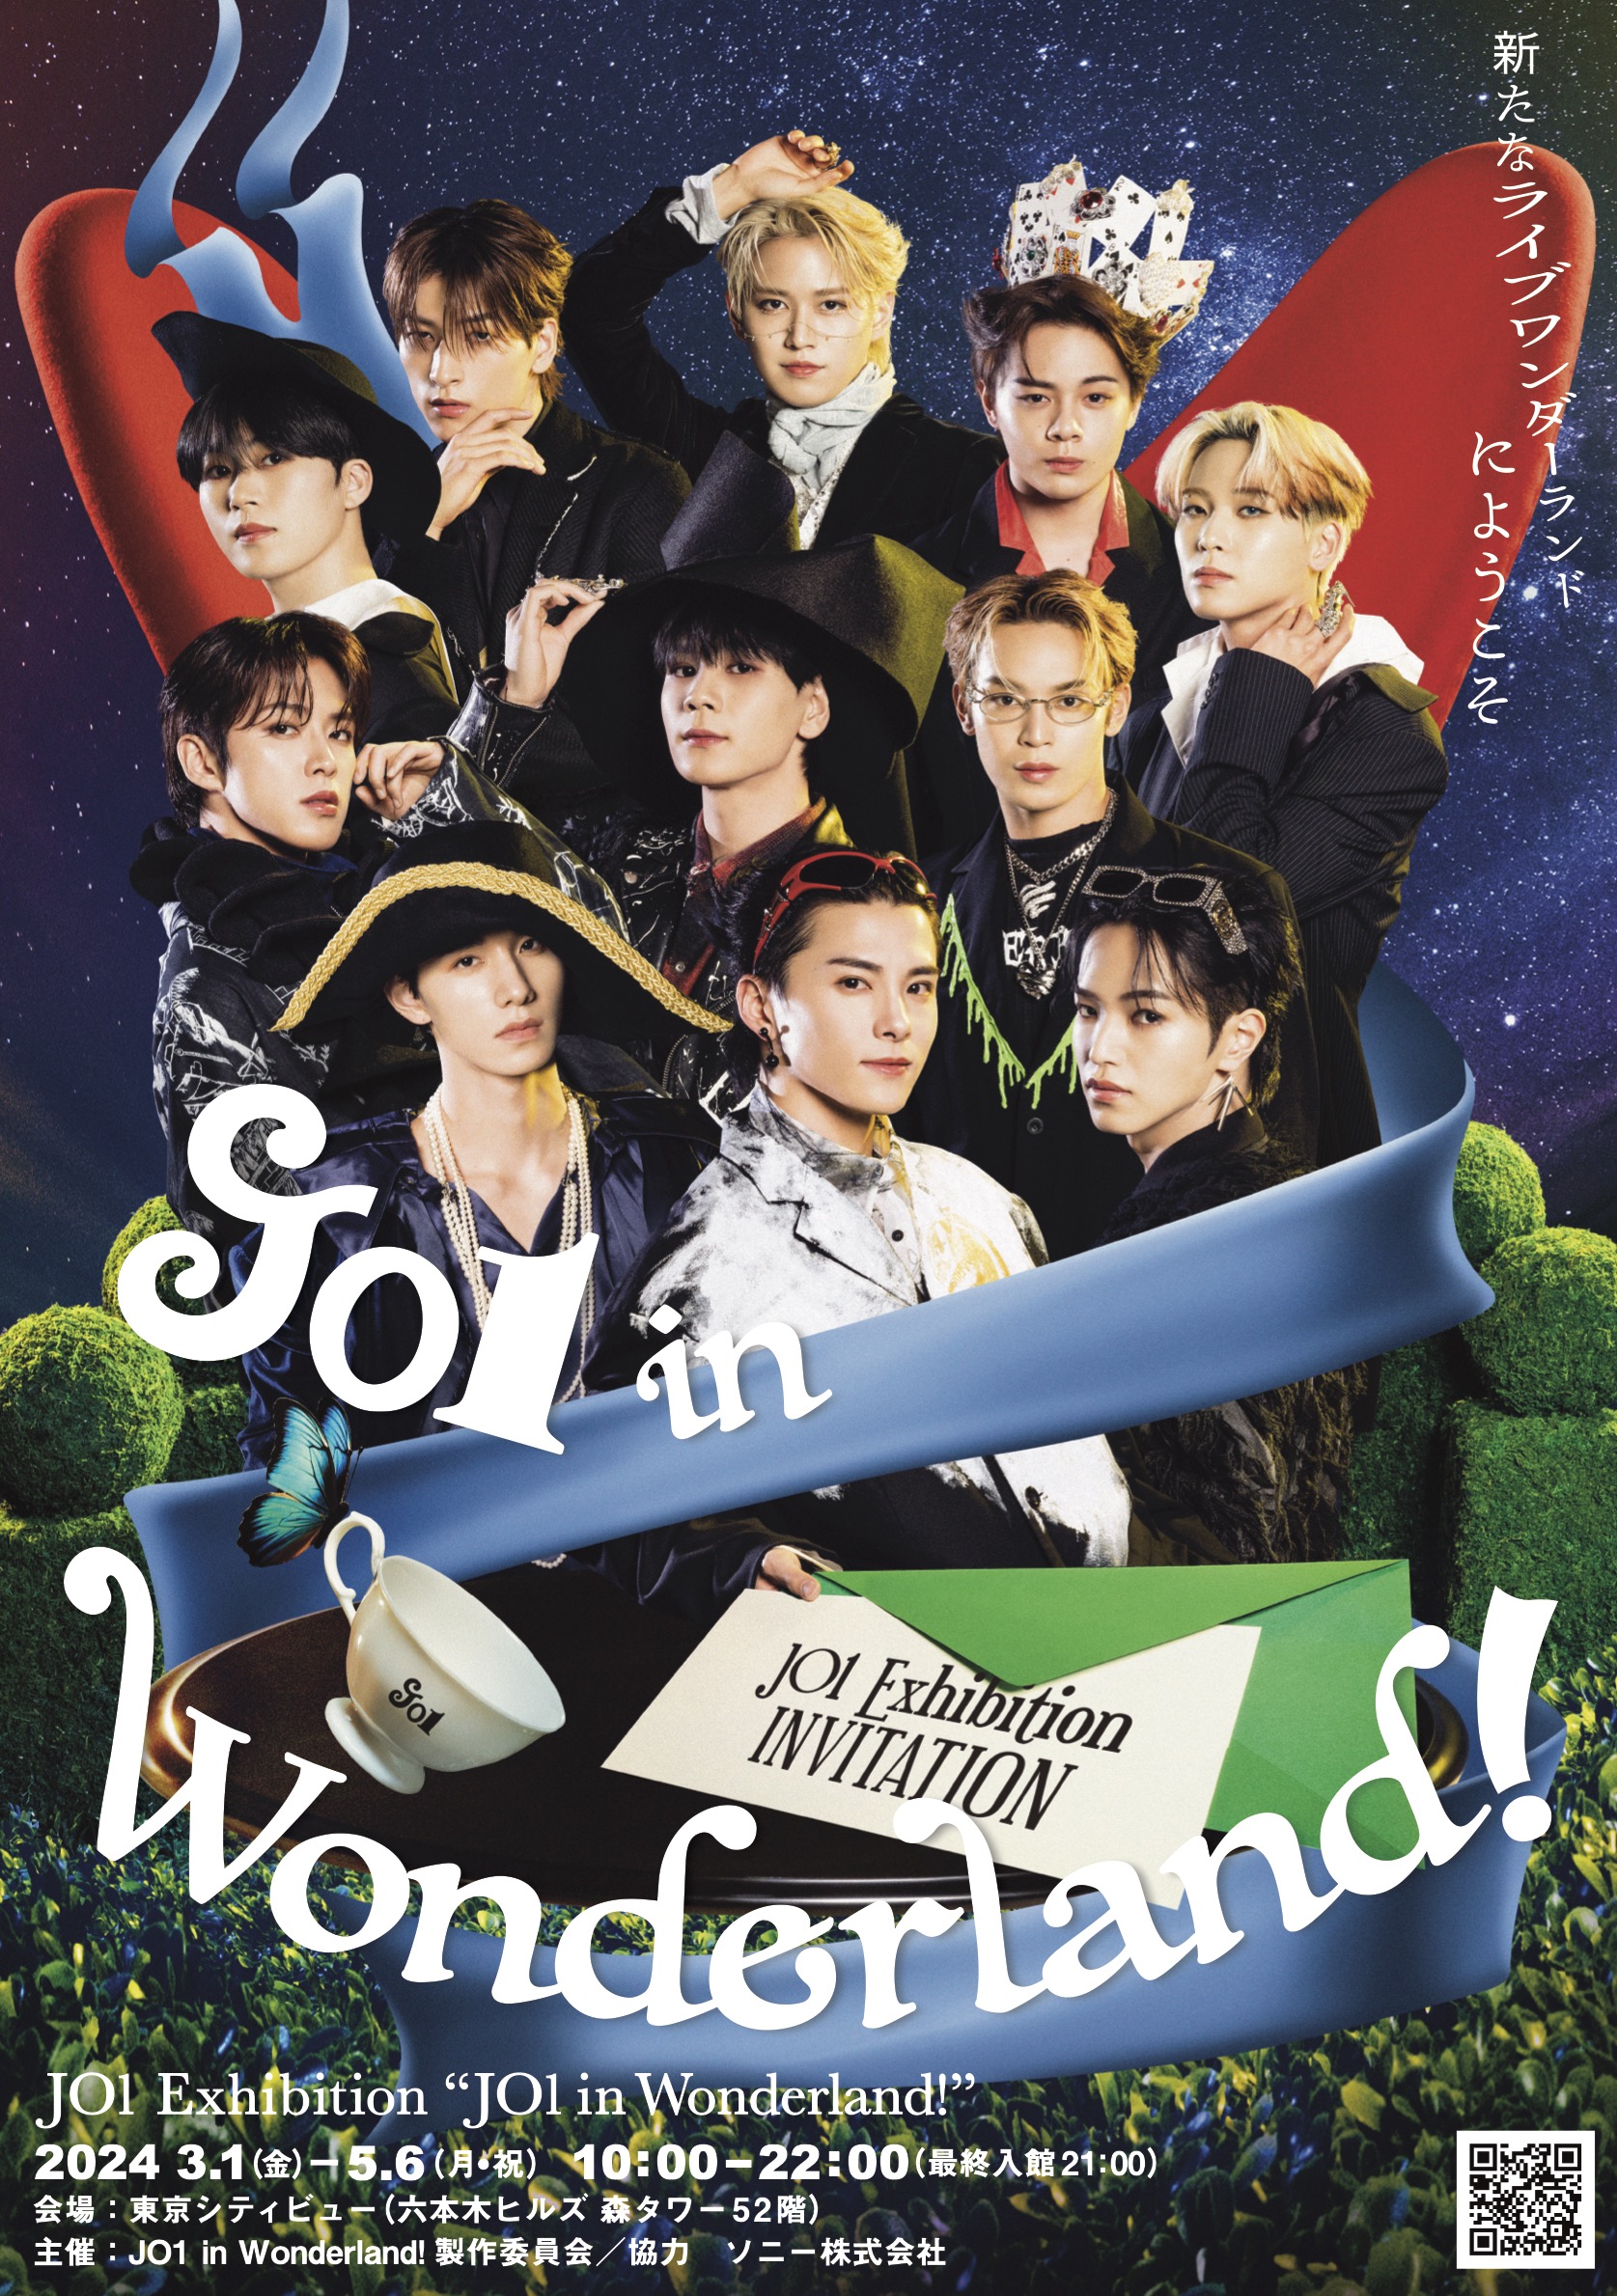 JO1 Exhibition “JO1 in Wonderland!” チケット一般発売中! | FANY ...